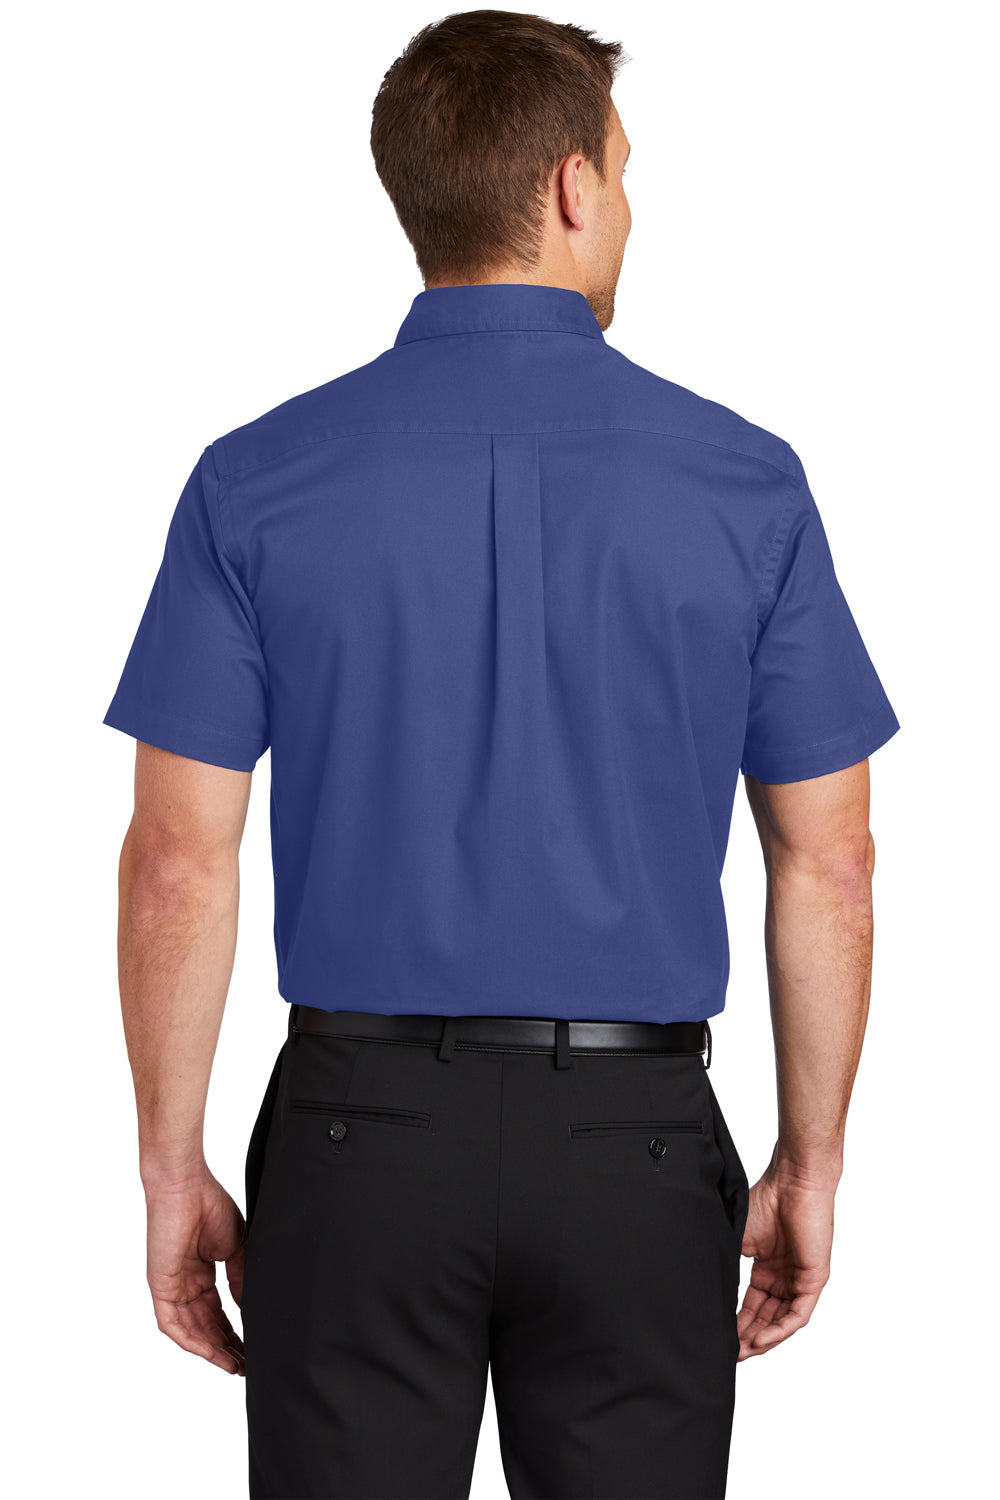 Port Authority S508/TLS508 Mens Easy Care Wrinkle Resistant Short Sleeve Button Down Shirt w/ Pocket Mediterranean Blue Back